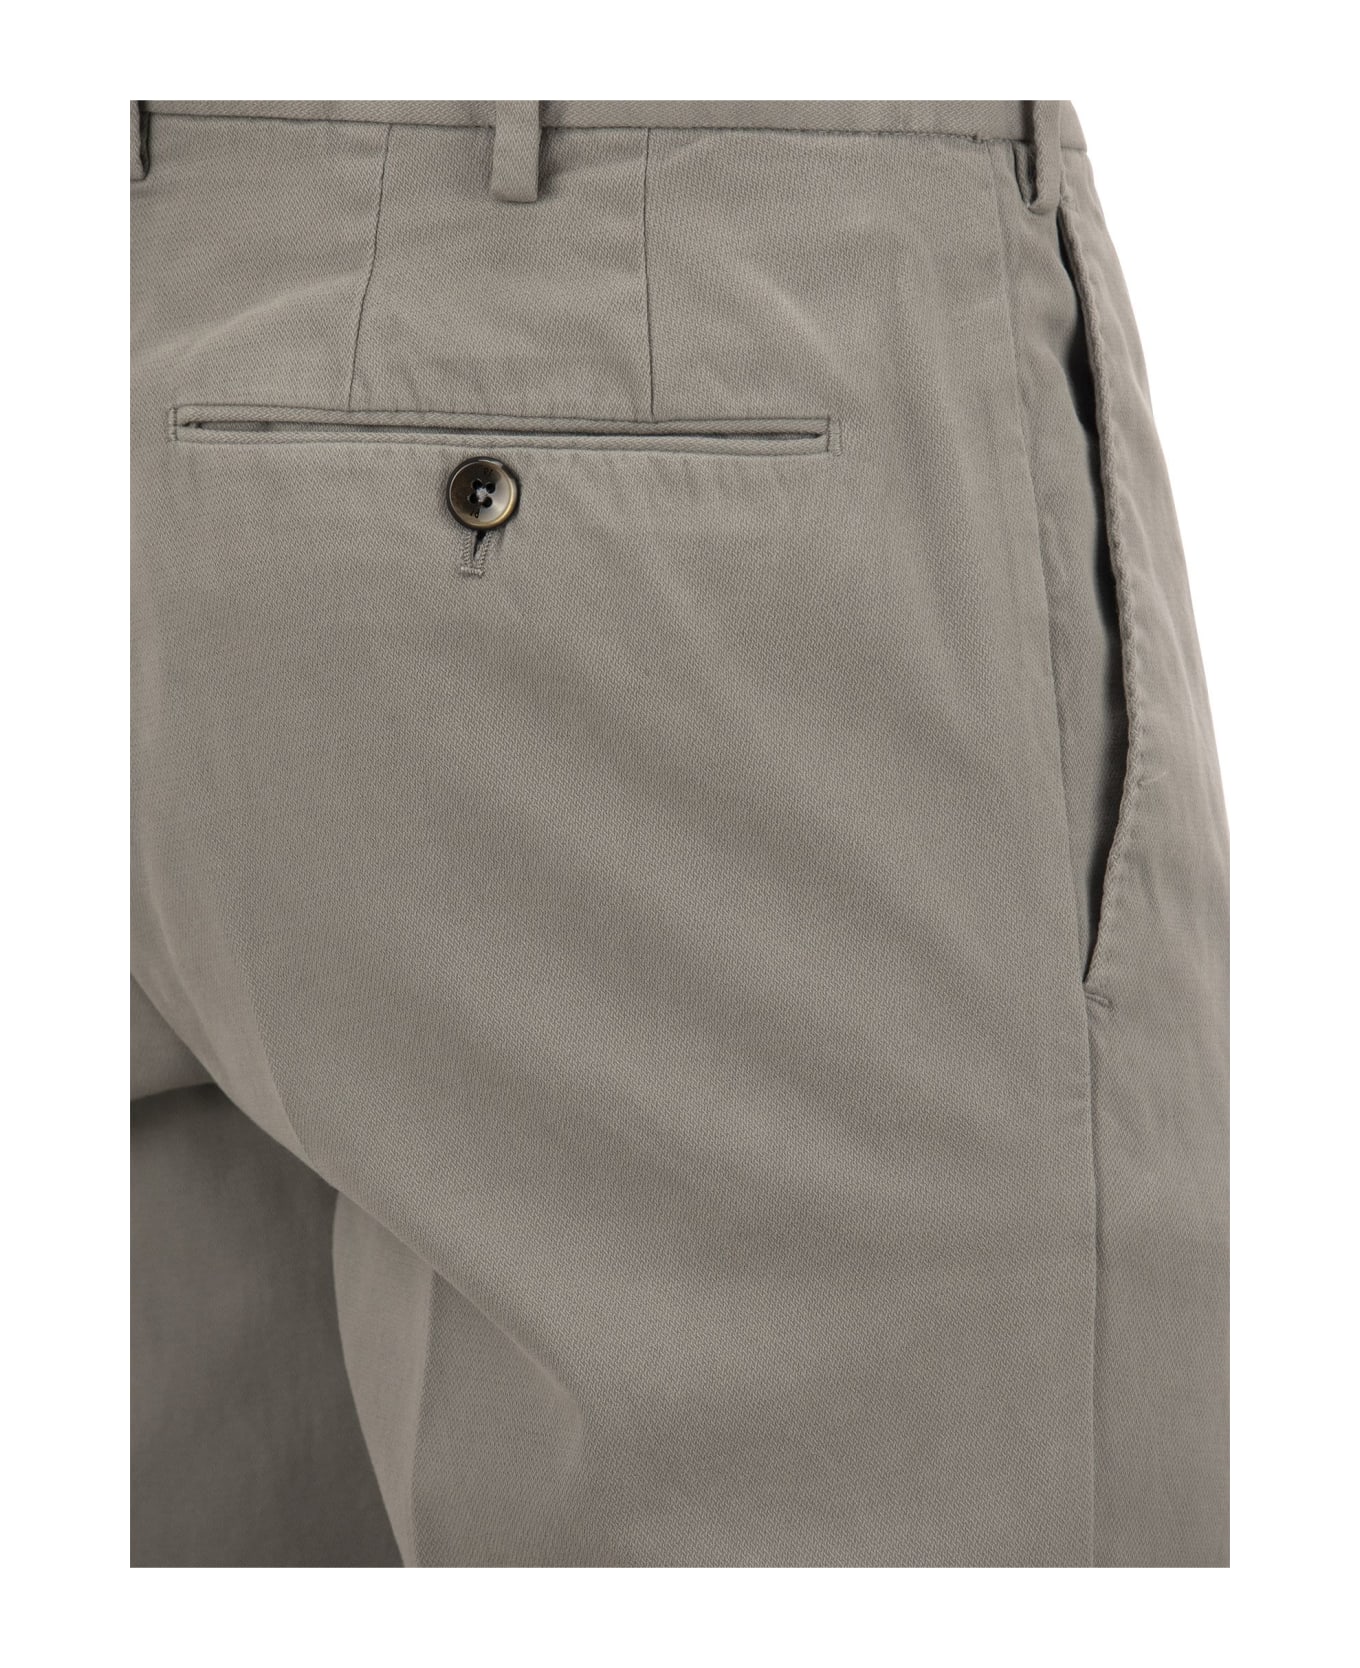 PT Torino Super Slim Cotton Trousers - Grey